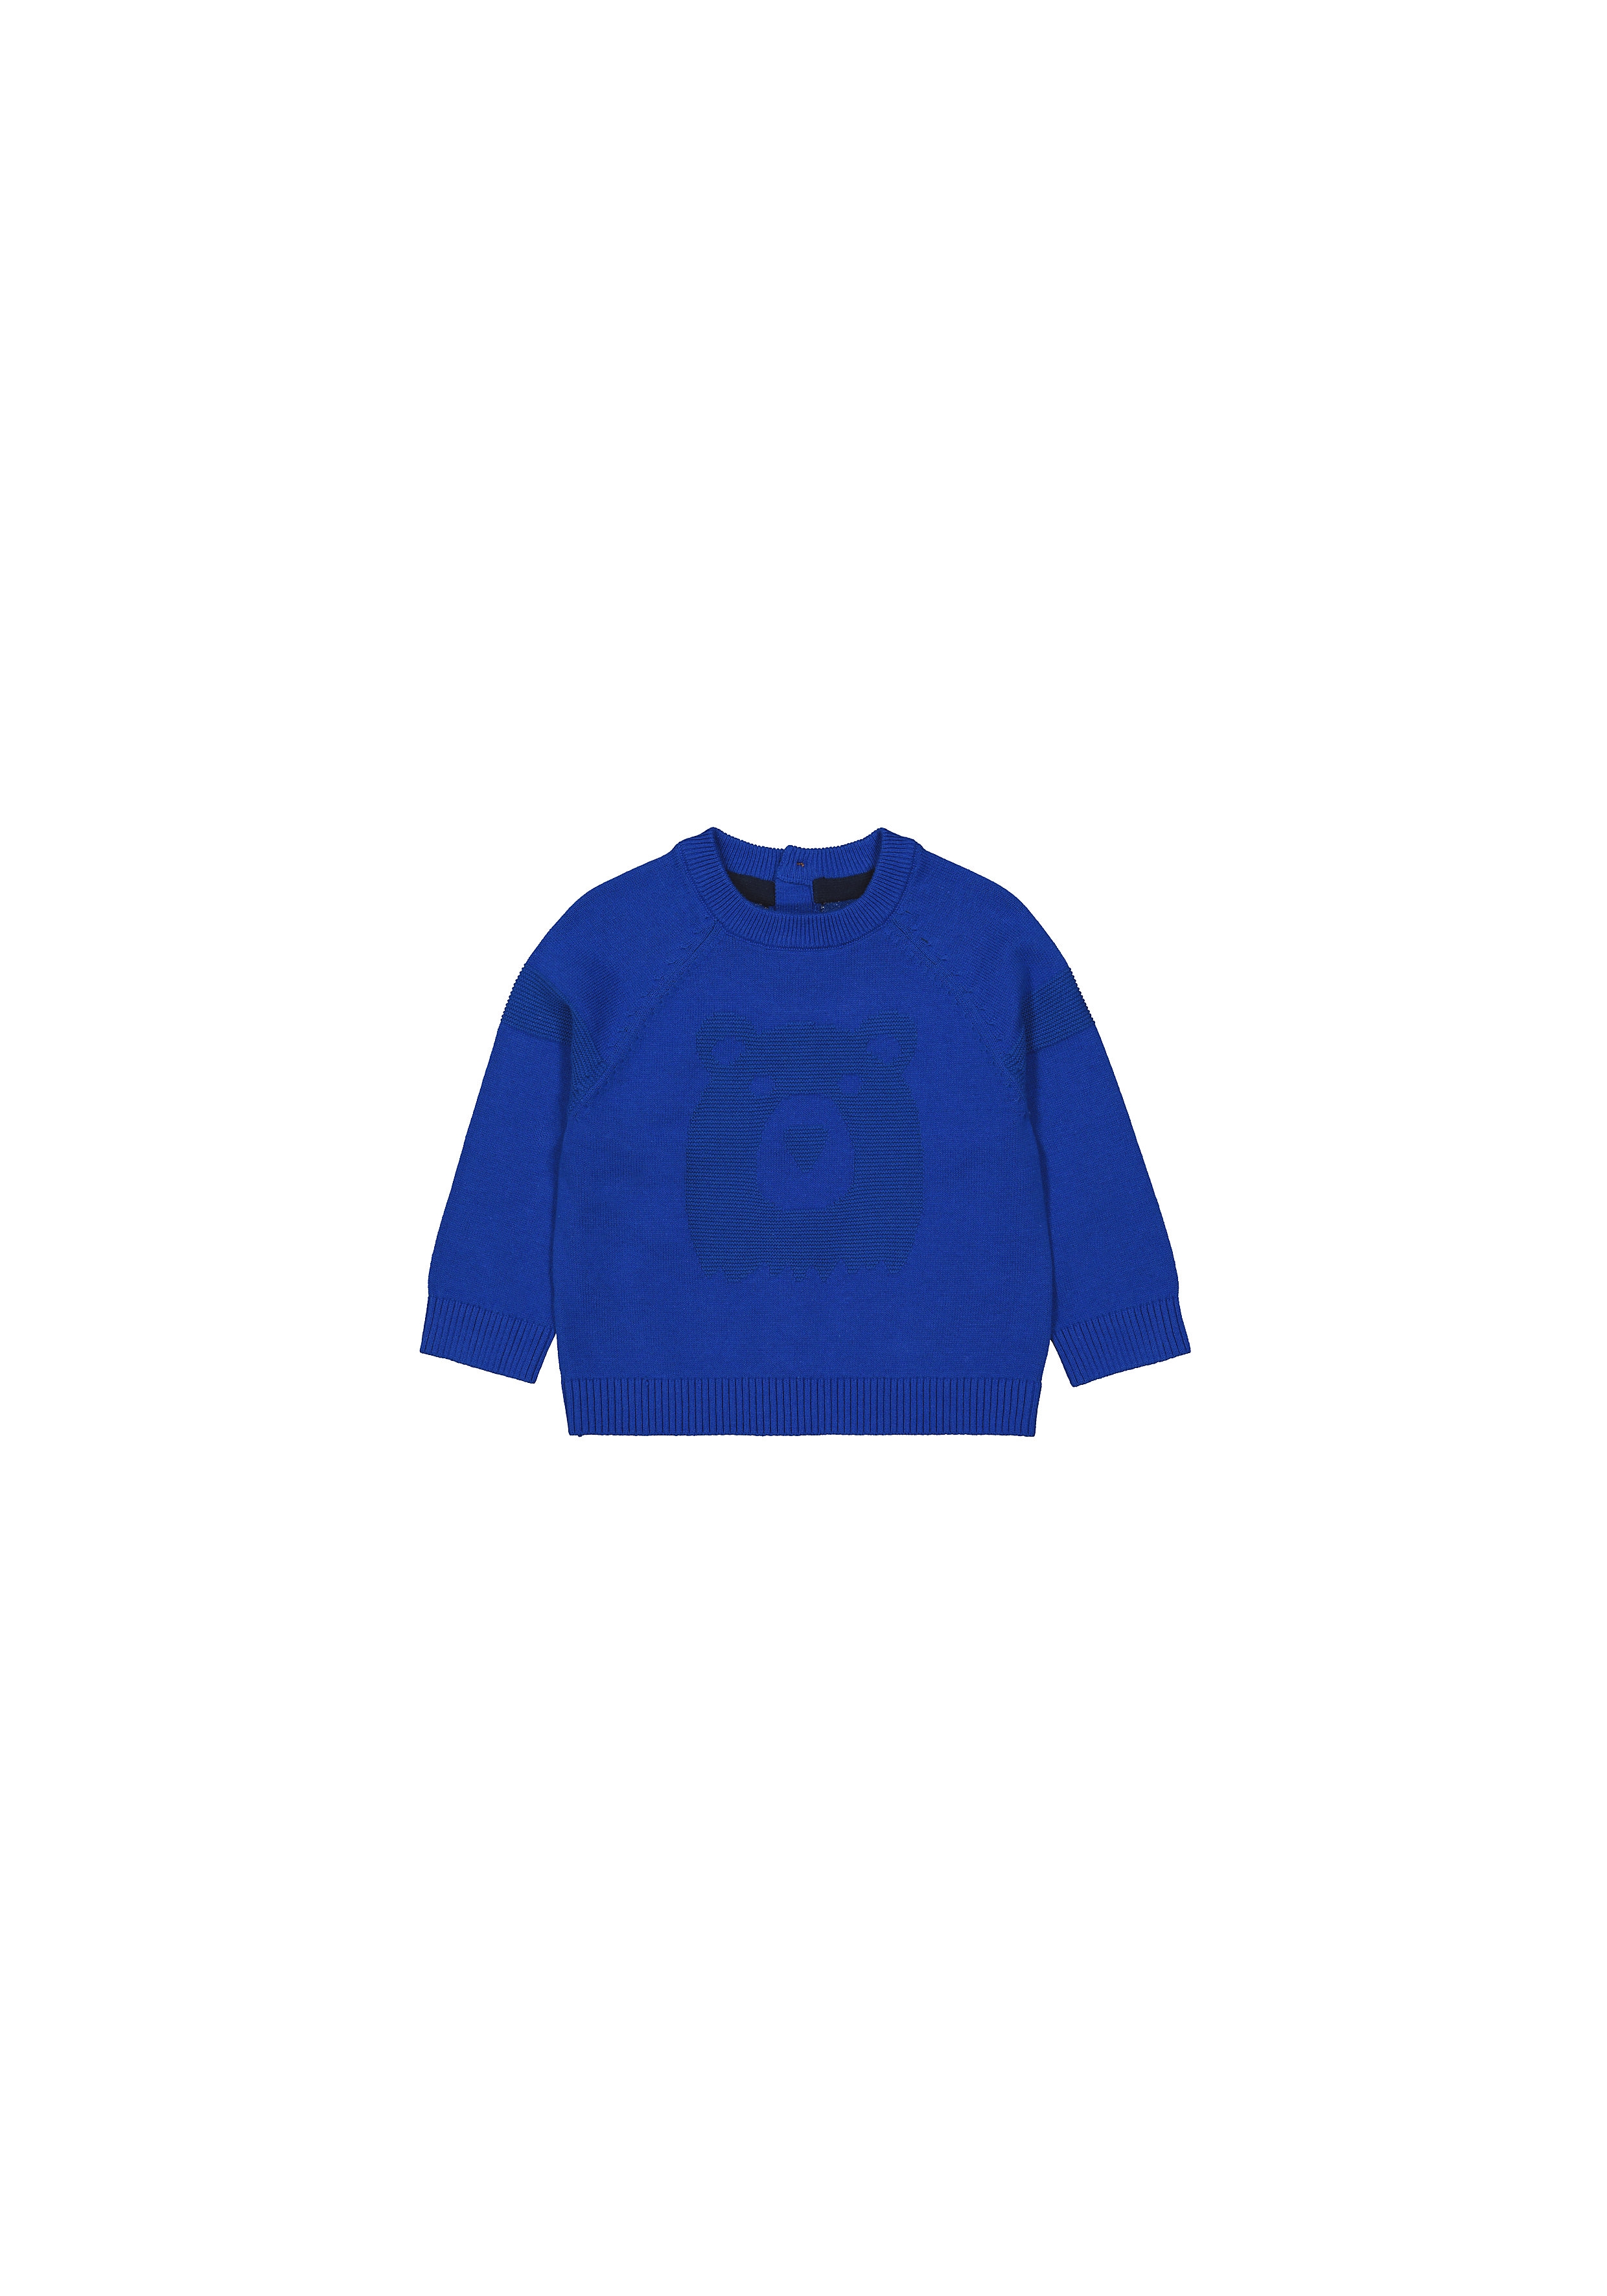 Boys Full Sleeves Sweaters  - Blue